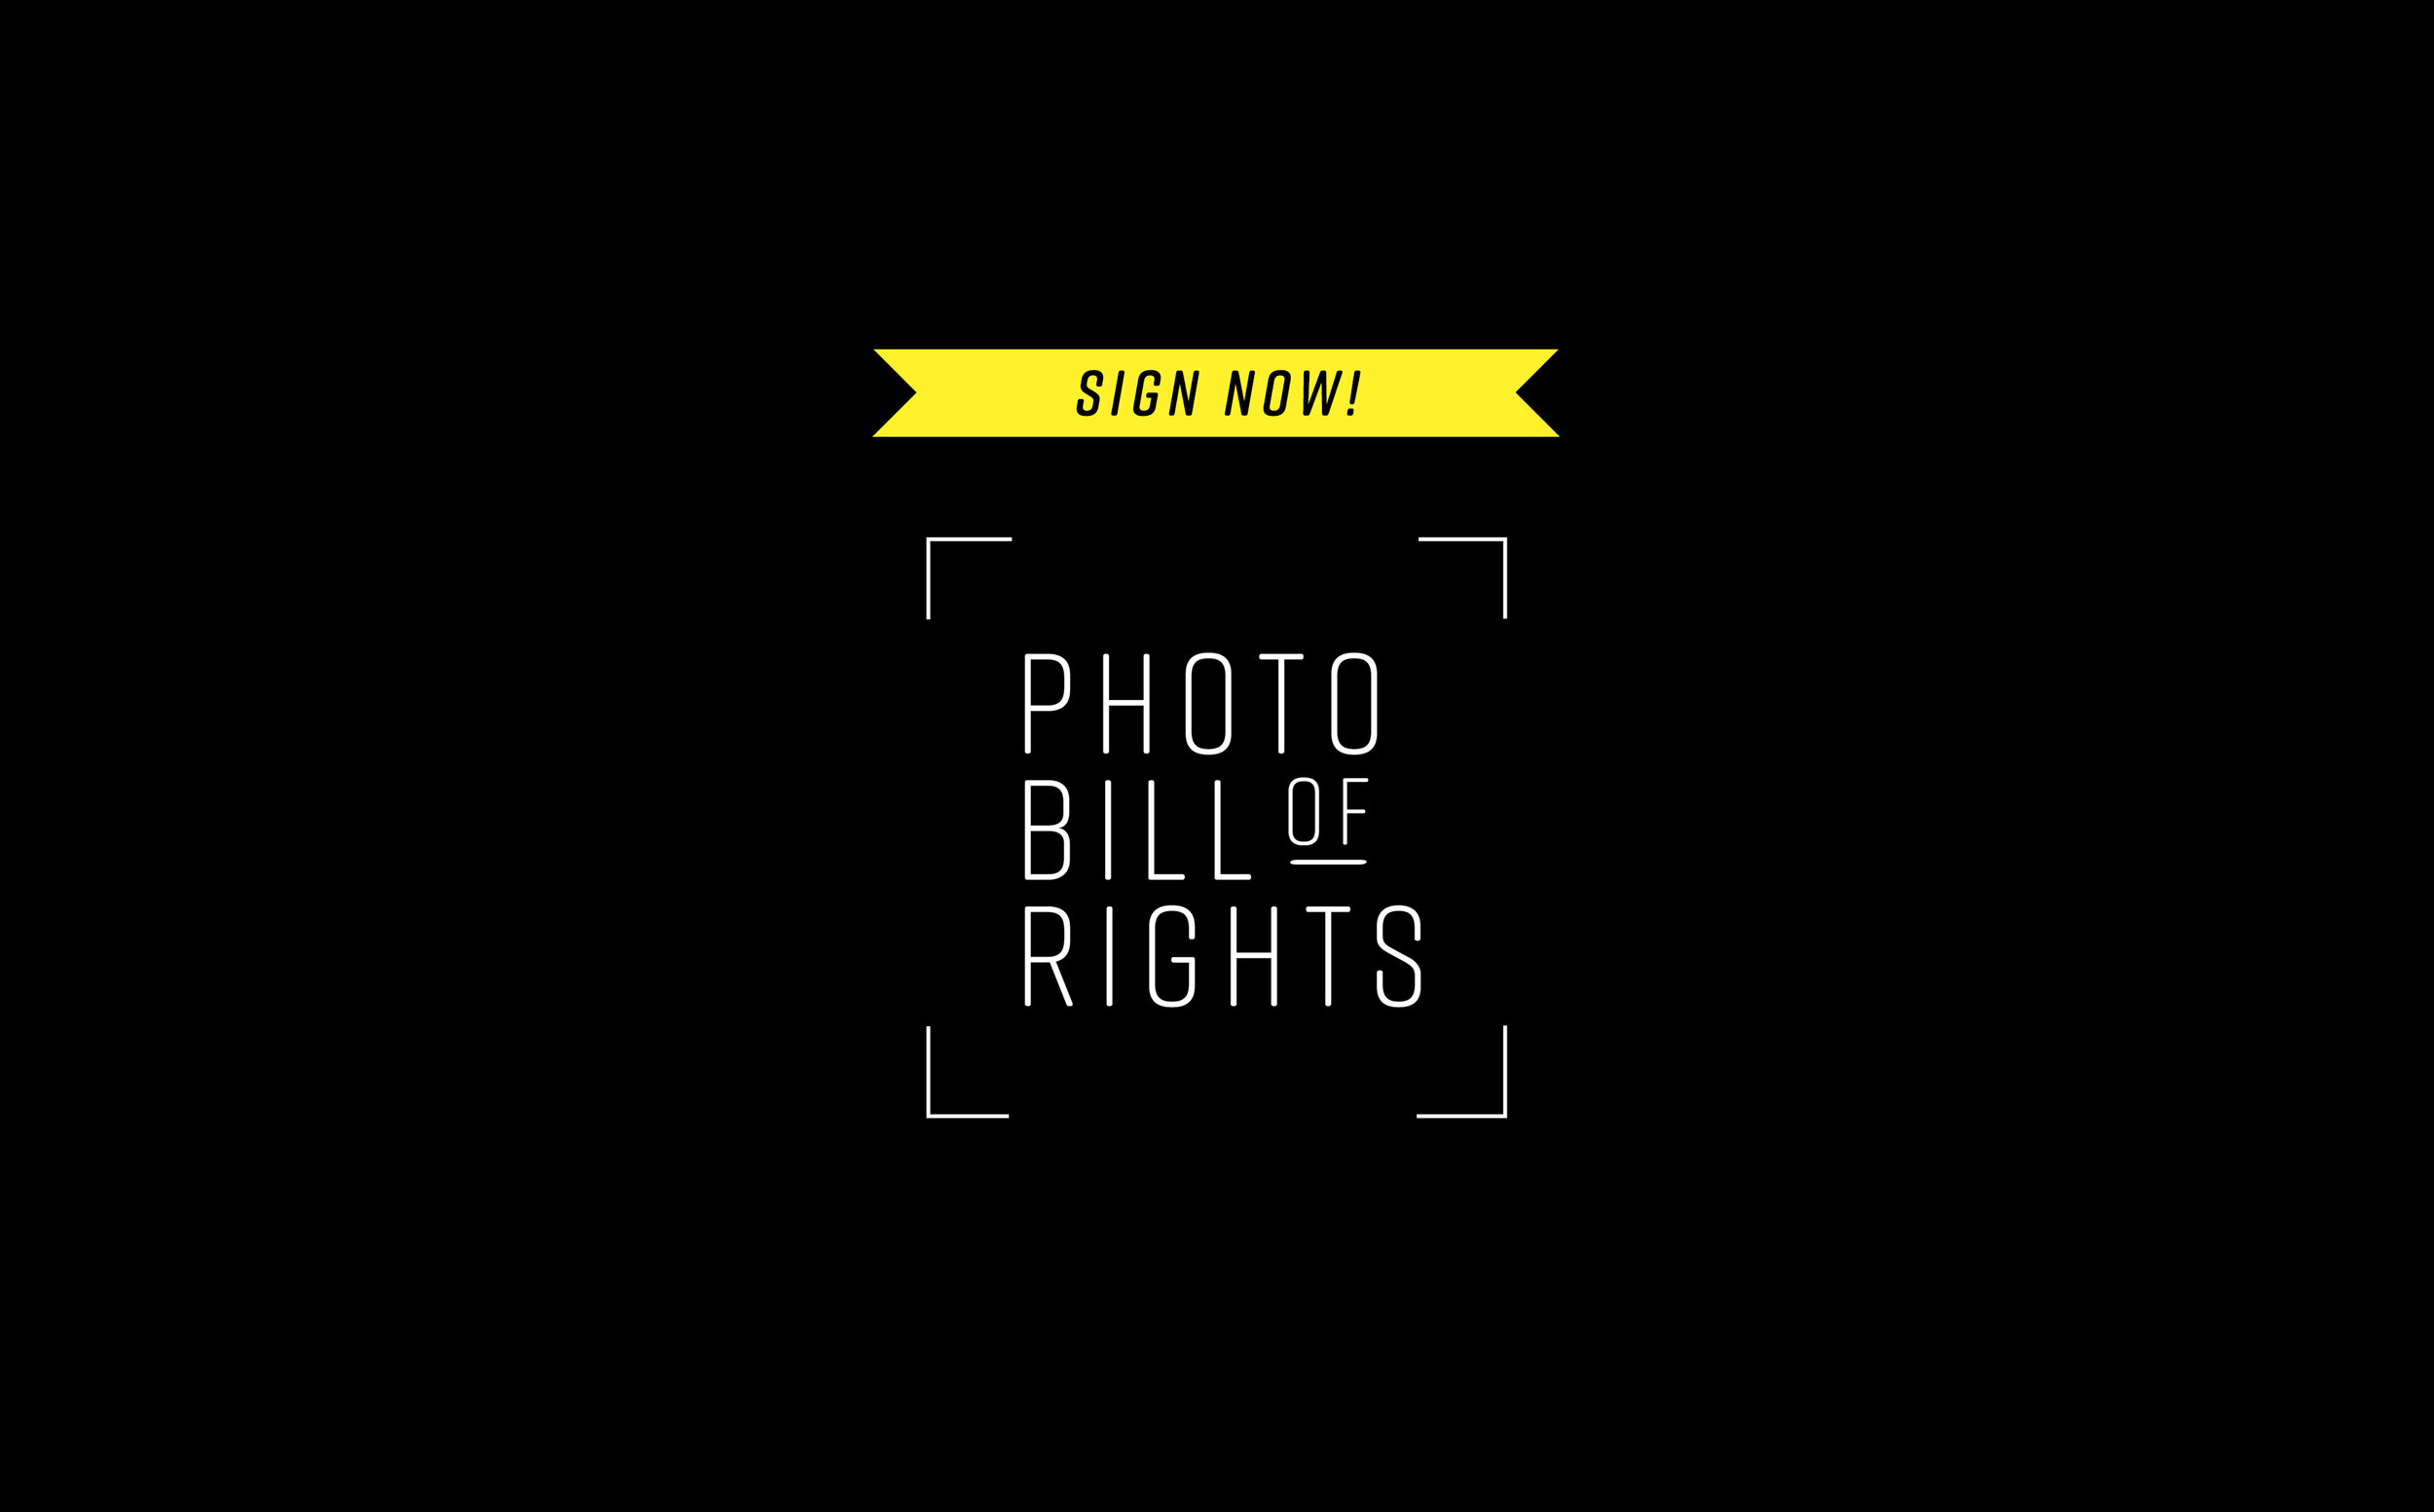 Signatories â photo bill of rights